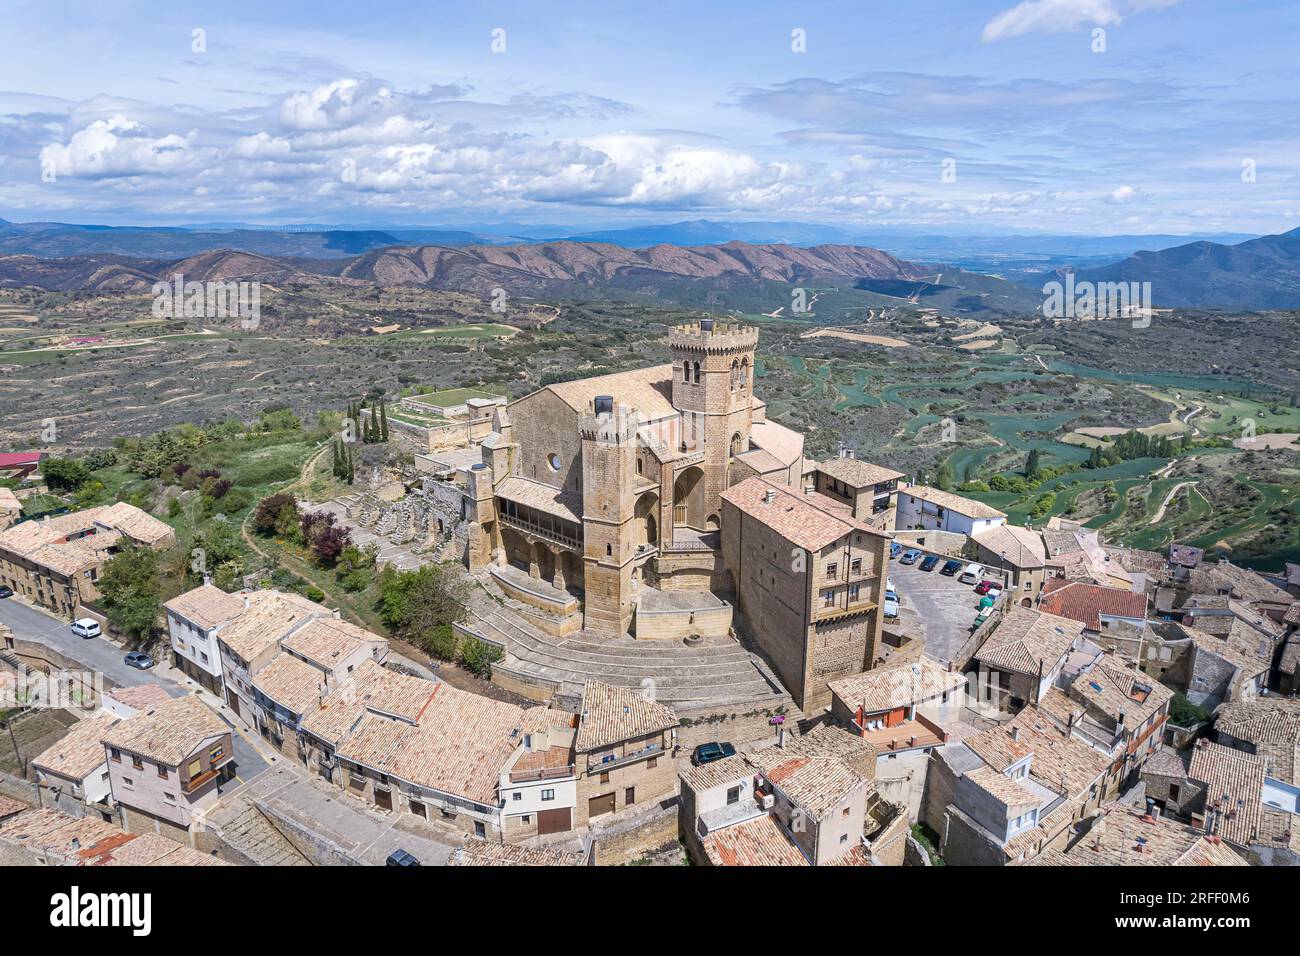 Spain, Navarra, Ujue, the village (aerial view) Stock Photo